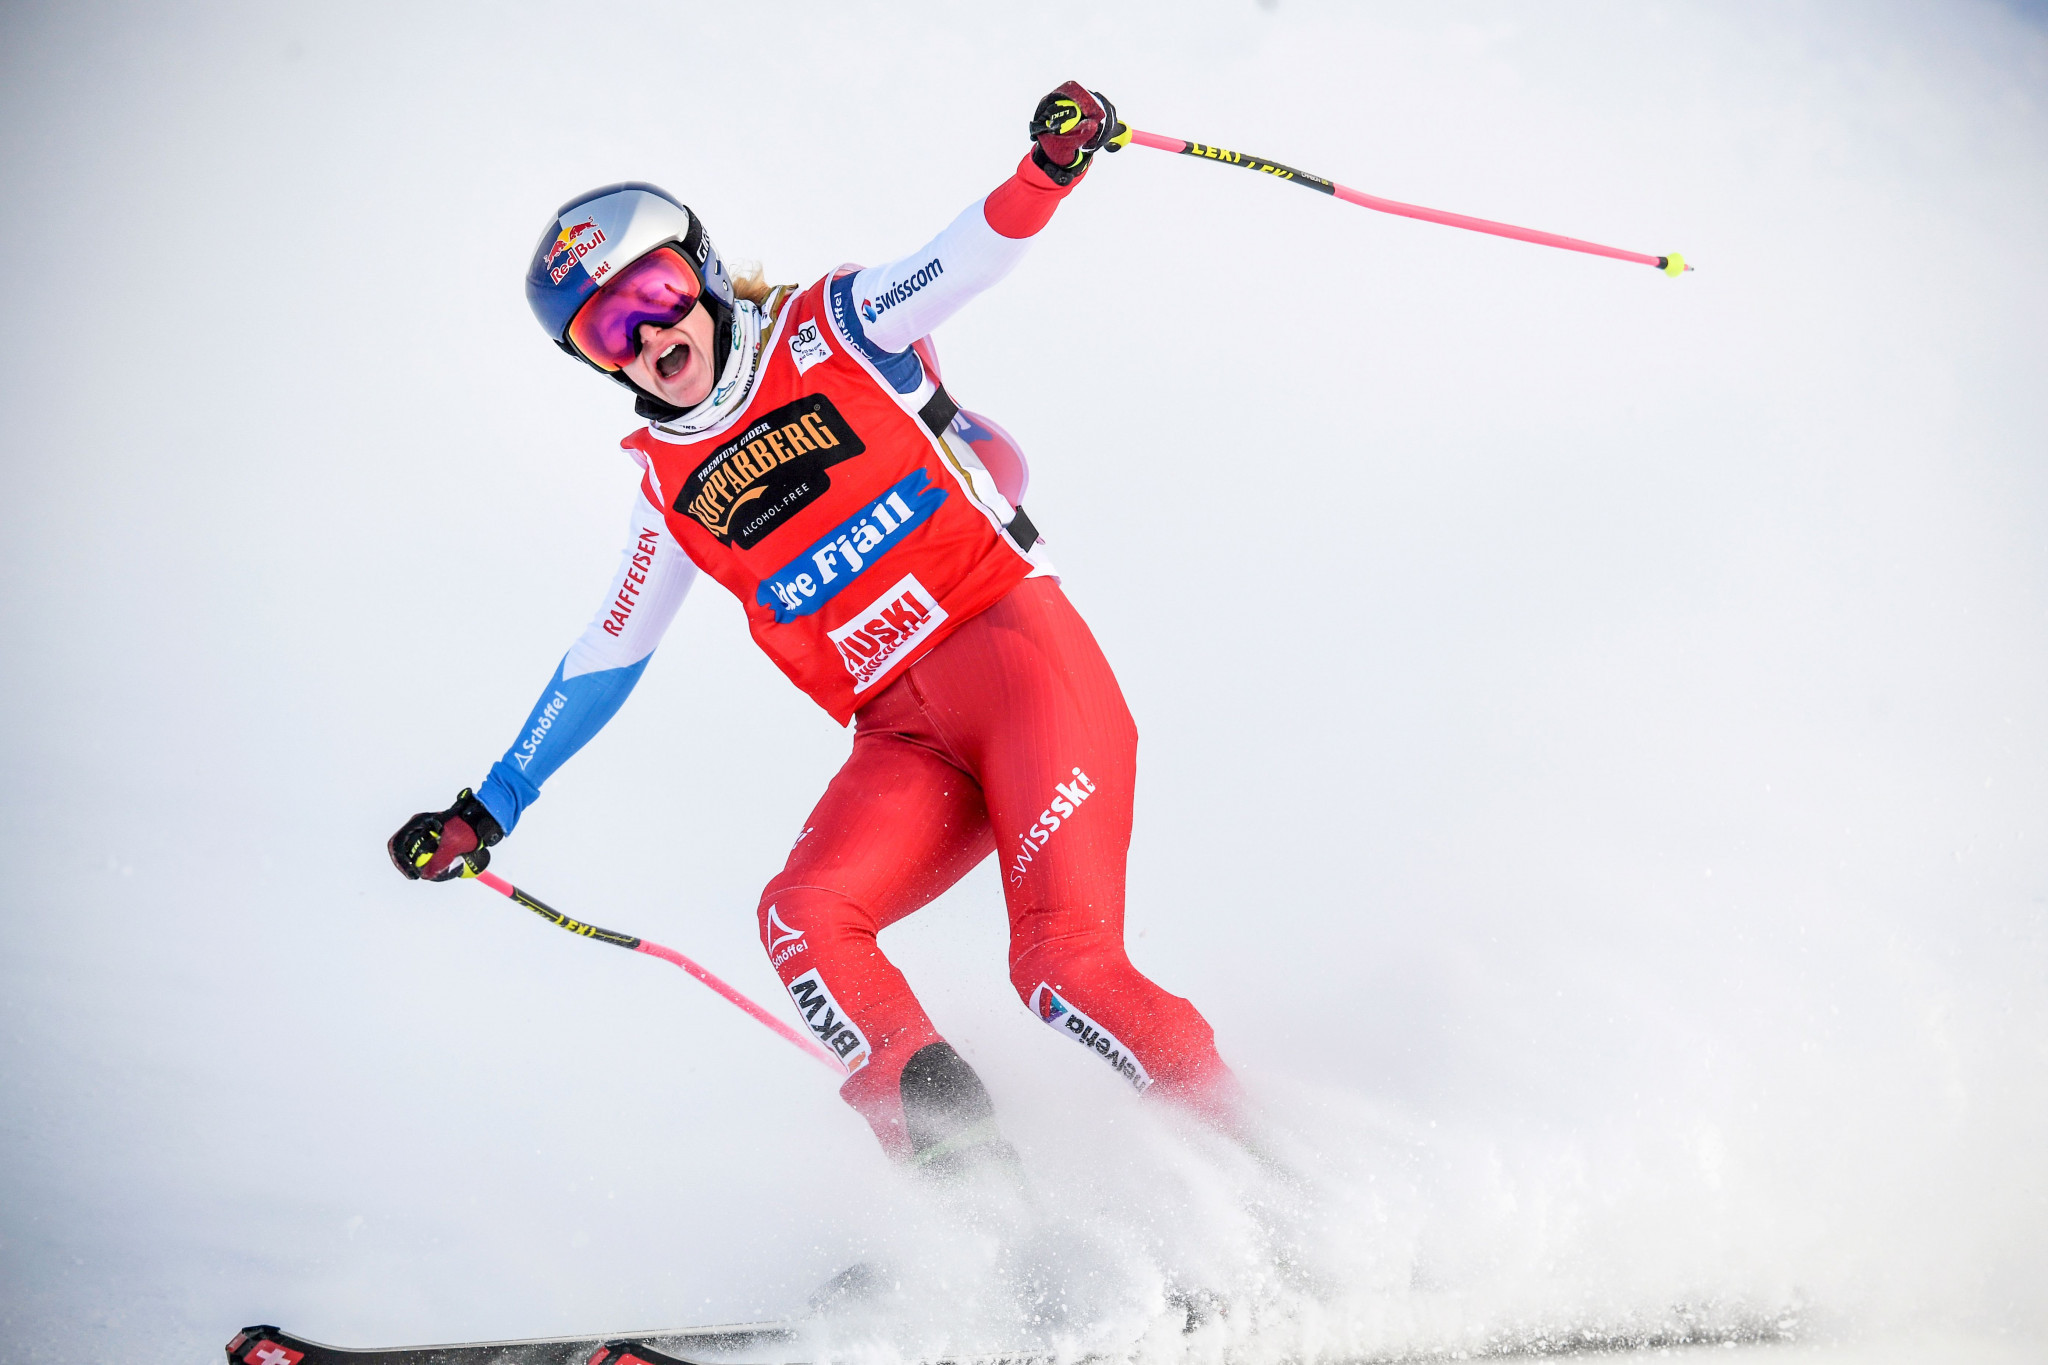 Photo-finish win in Bakuriani earns Smith third FIS Ski Cross World Cup title